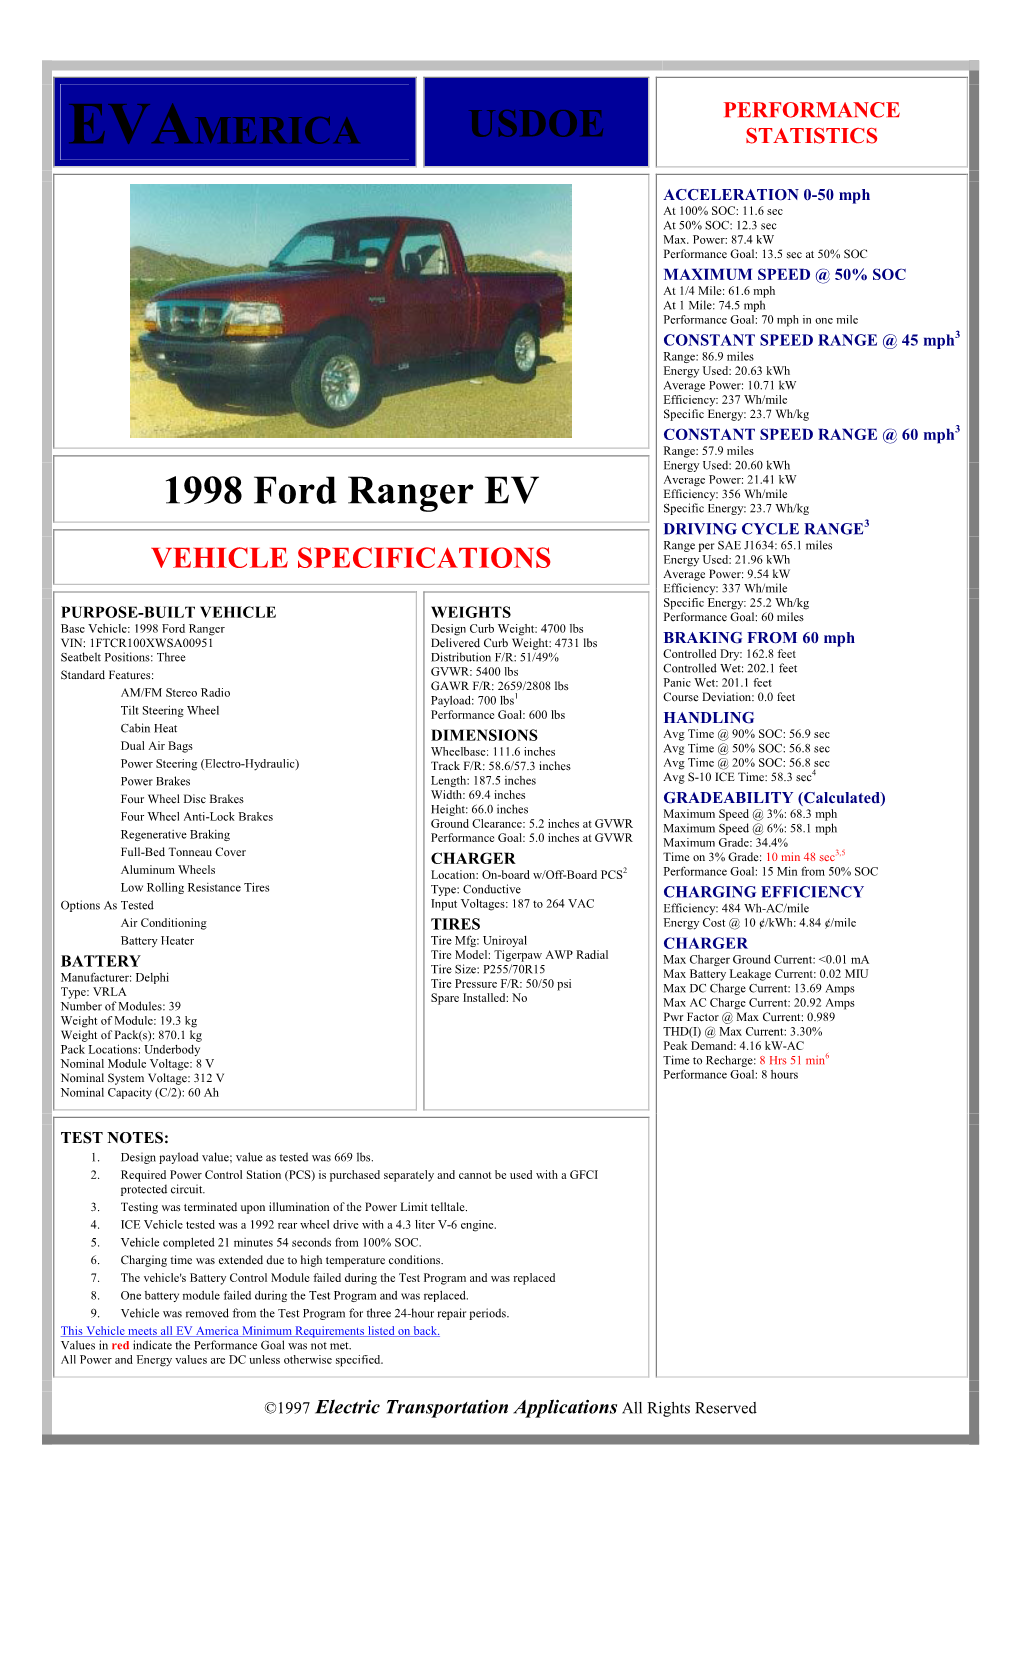 Evamerica 1998 Ford Ranger EV Performance Results